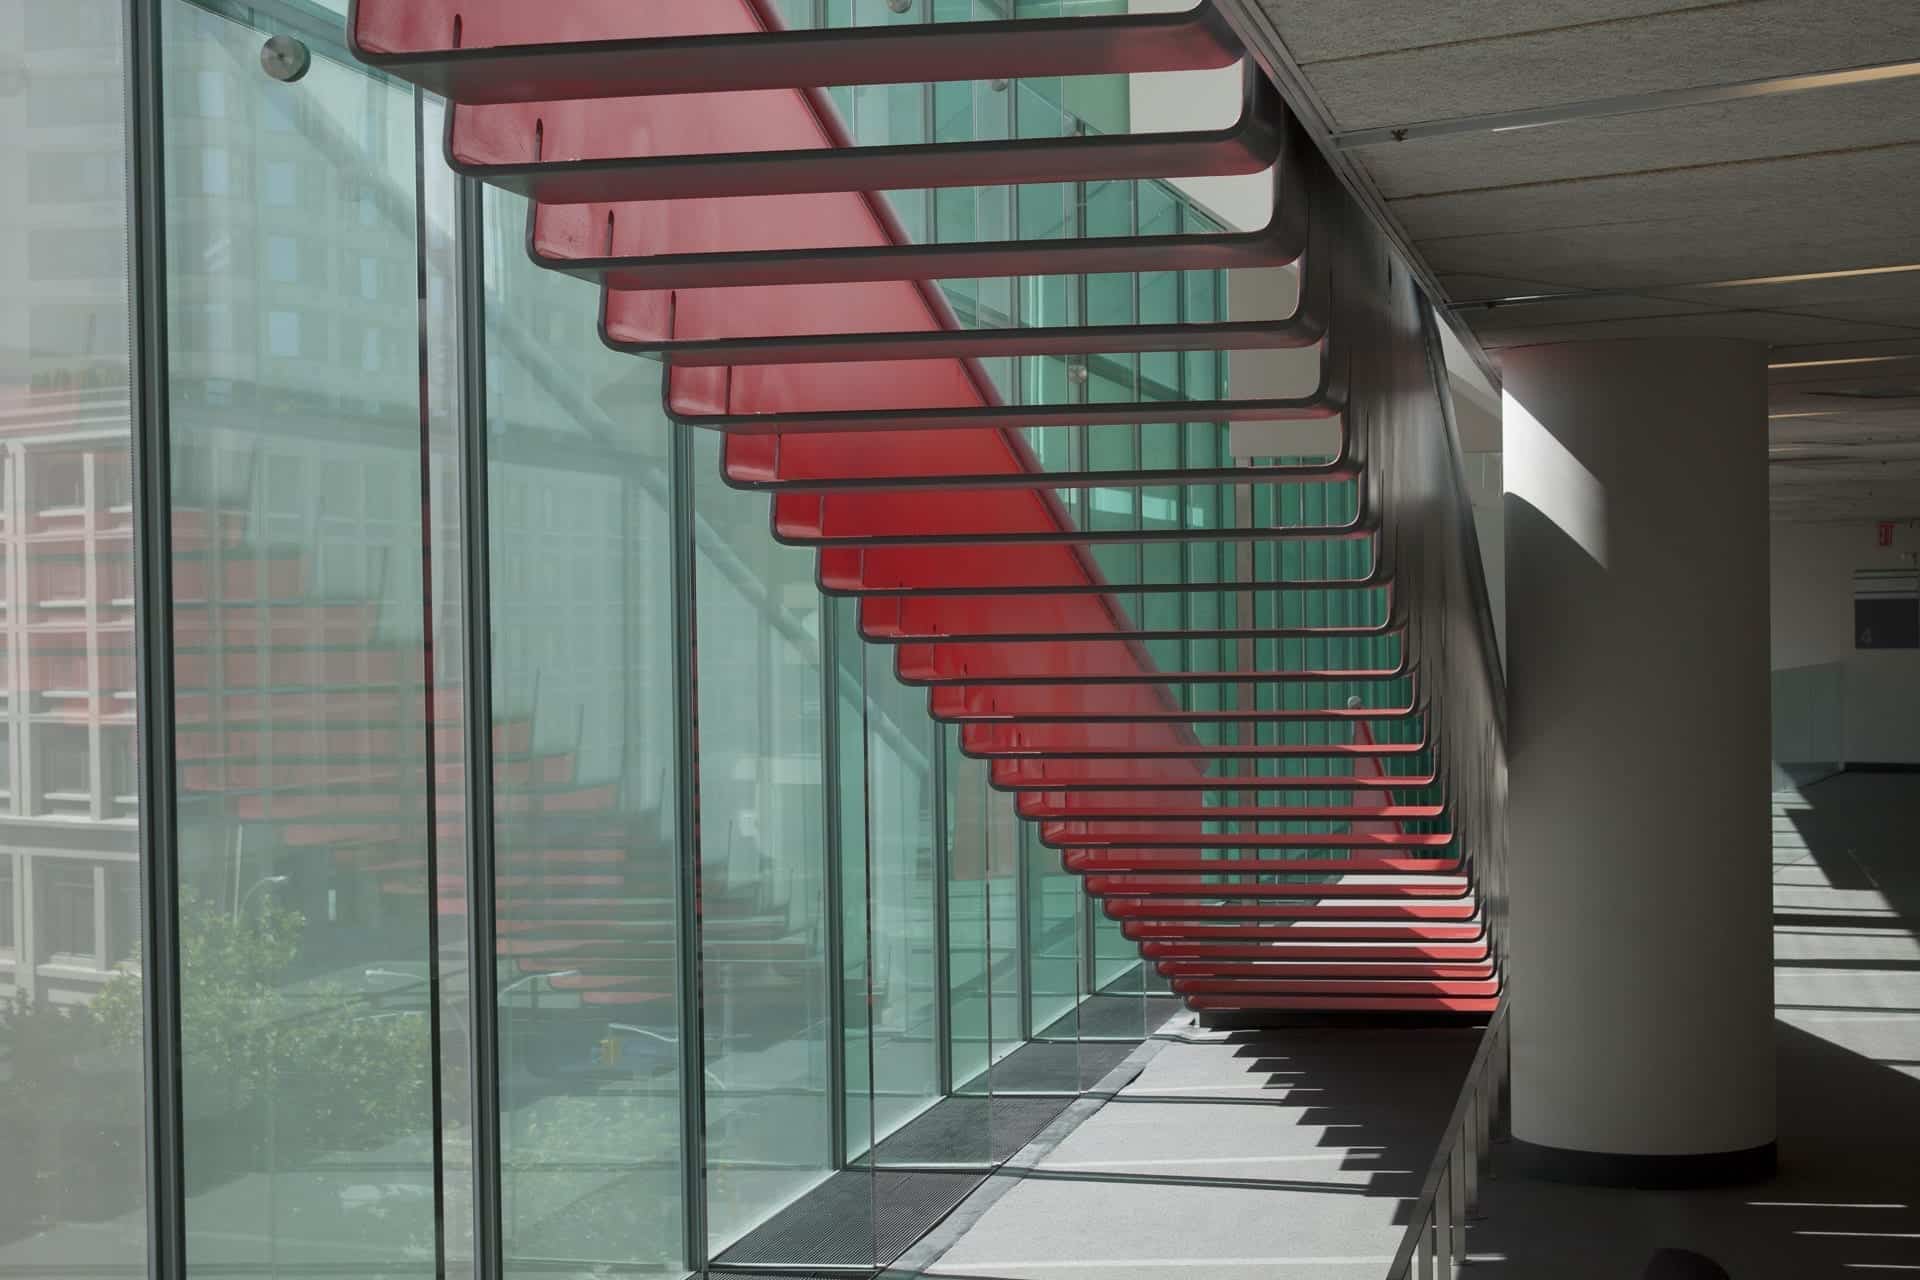 Juilliard Staircase designed by Diller Scofidio + Renfro.